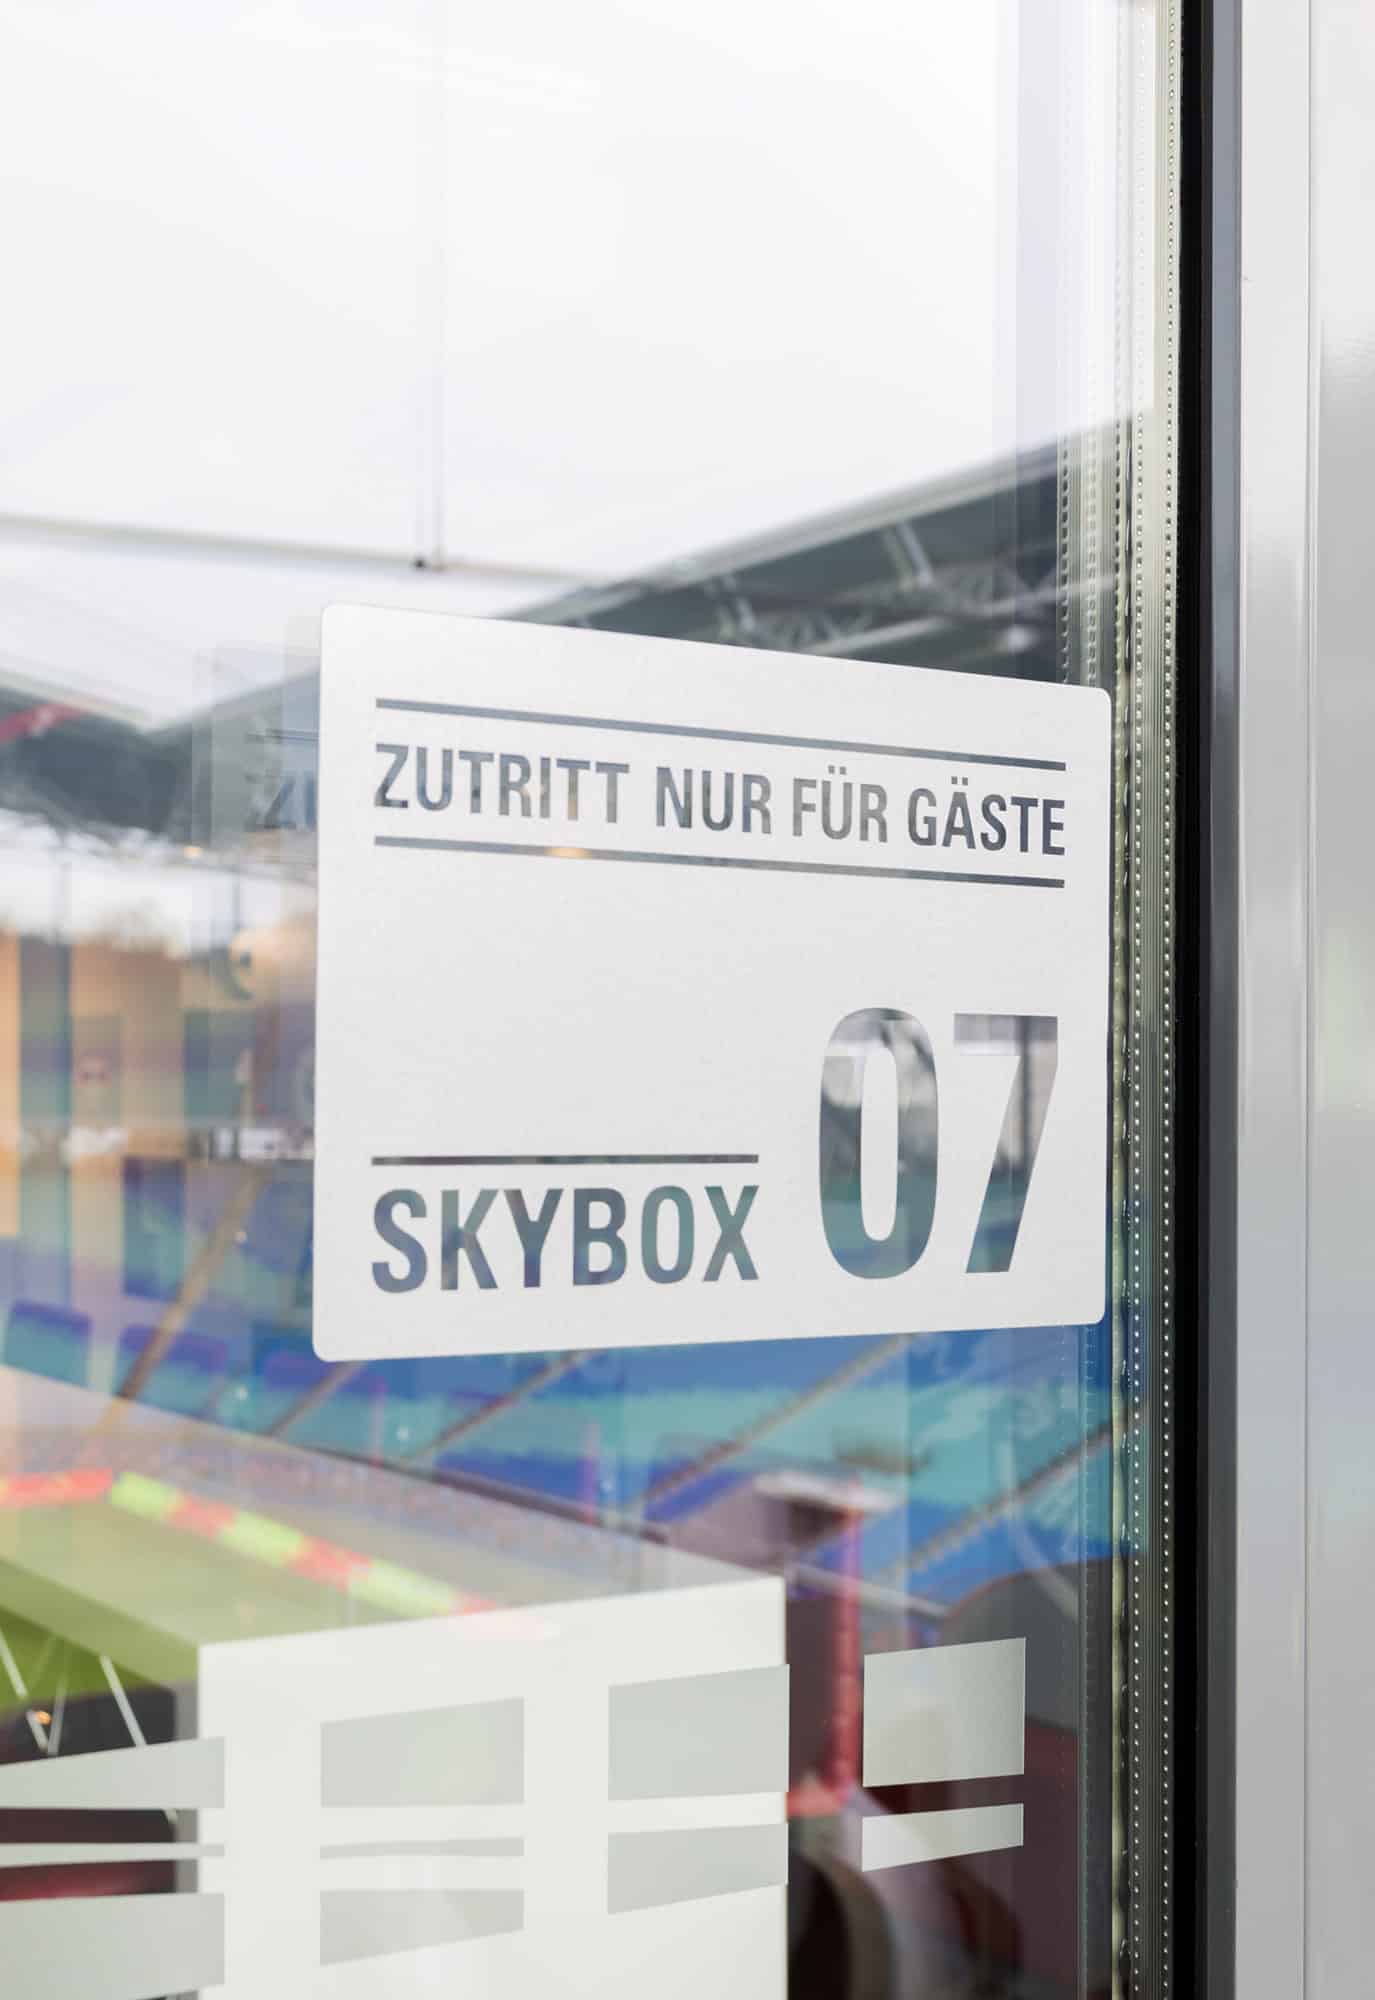 Skybox 07 Lounge Leipzig